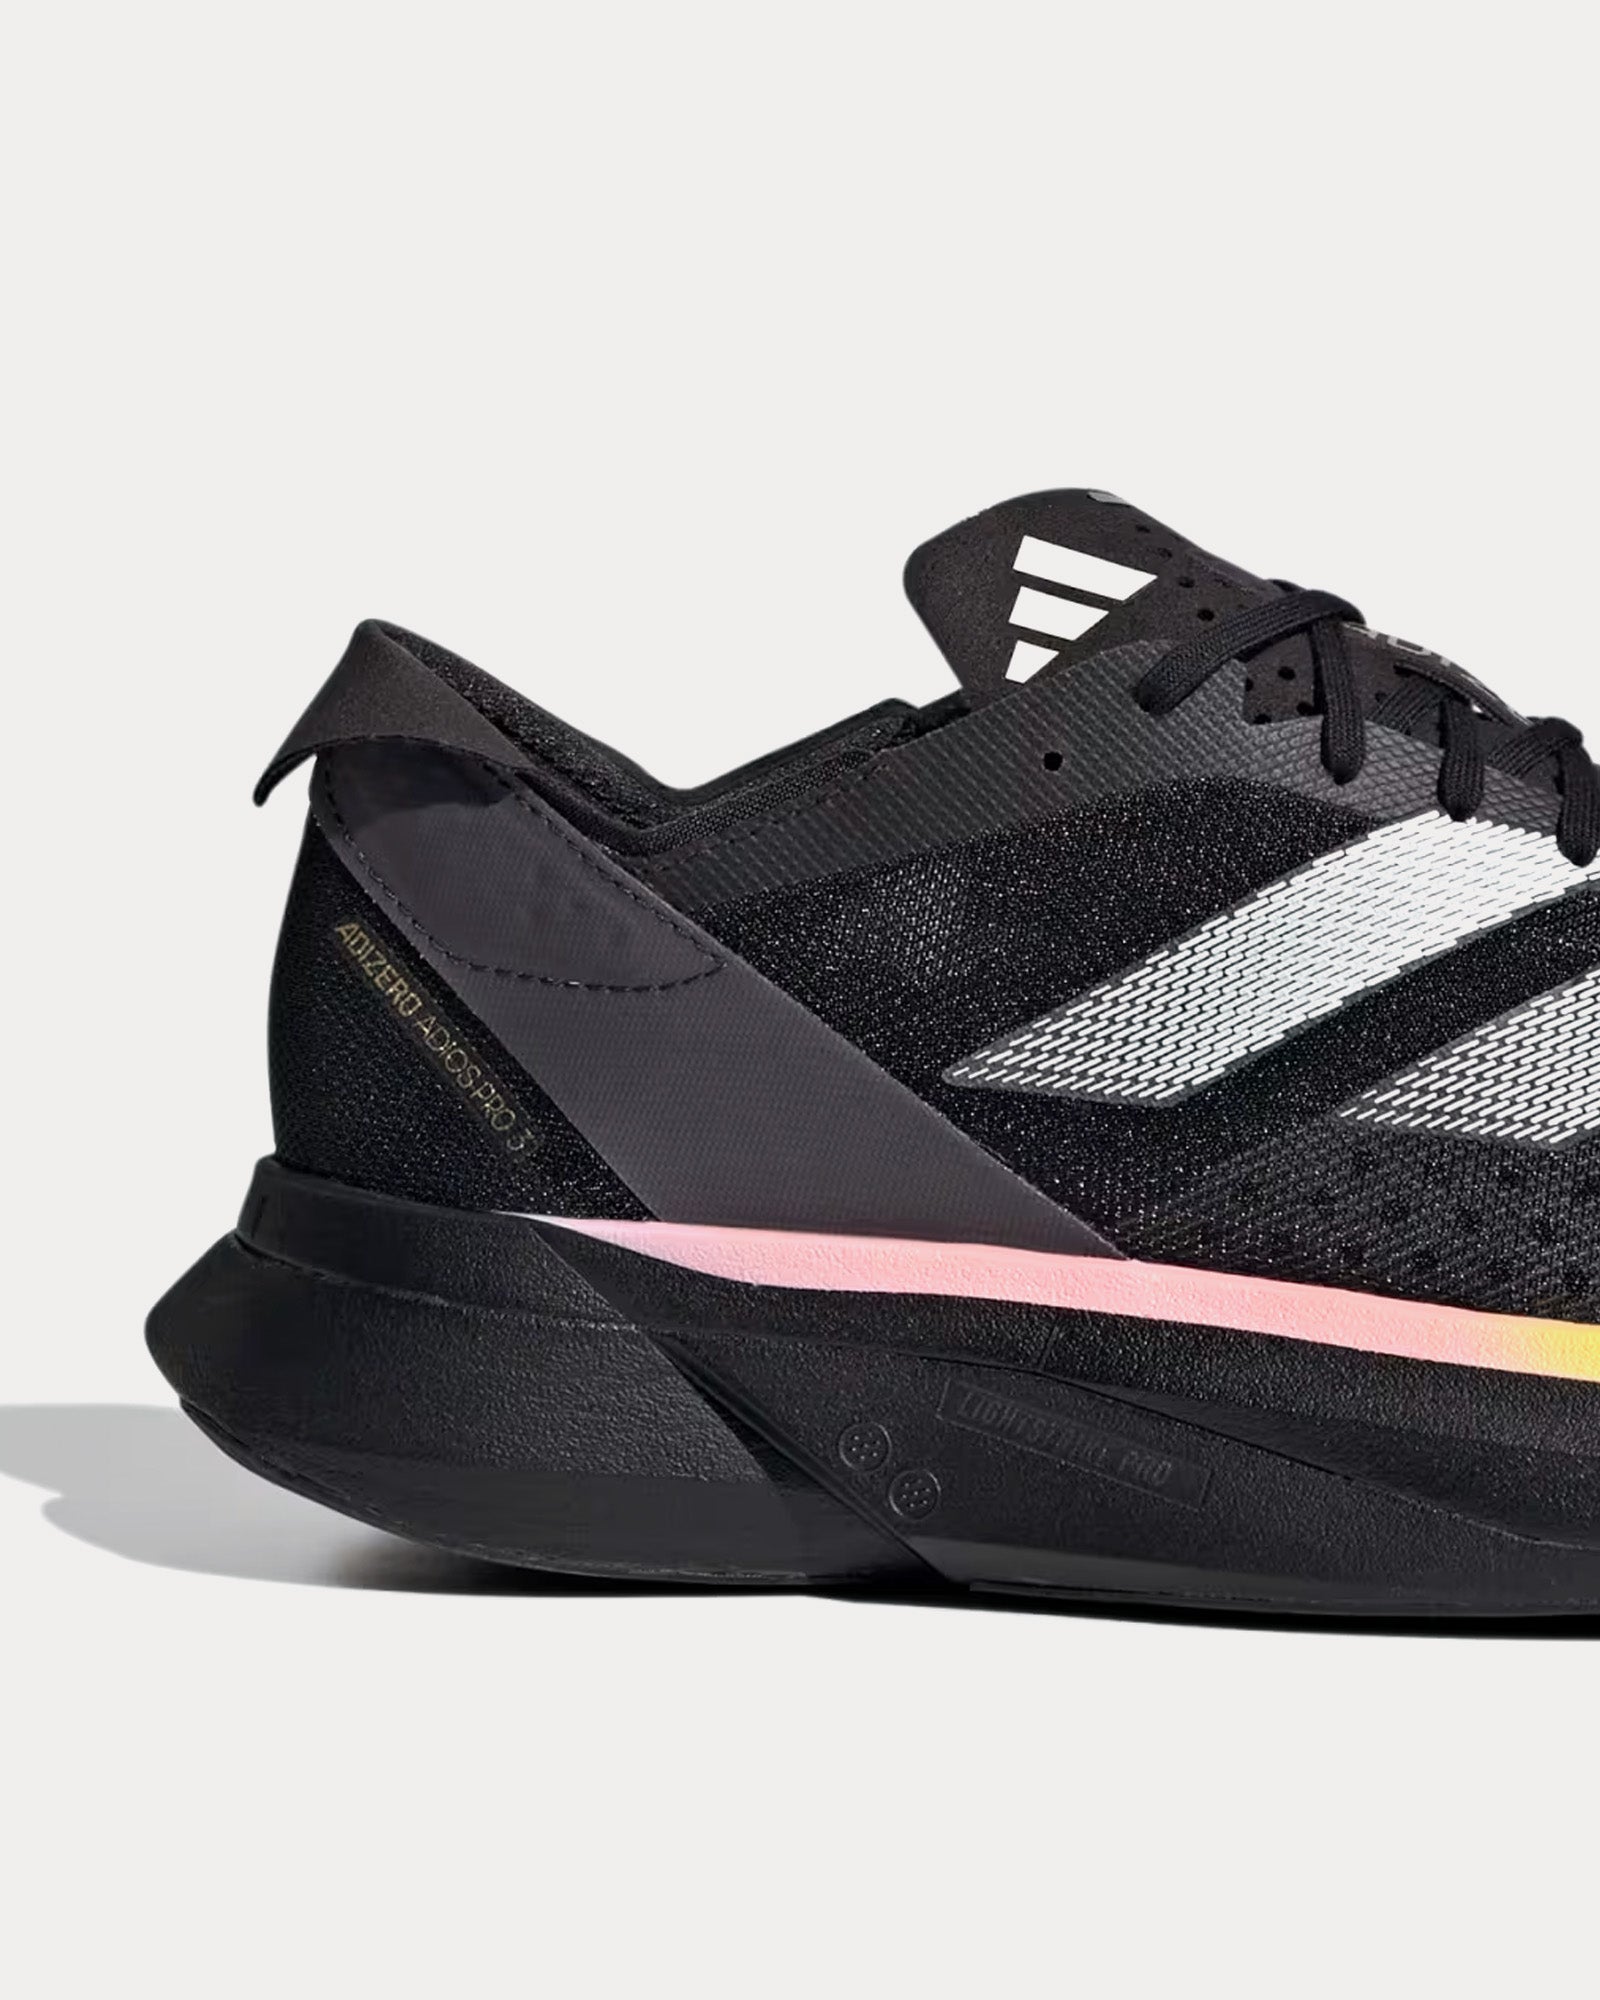 Adidas - Adios Pro 3 Core Black / Zero Metalic / Spark Running Shoes